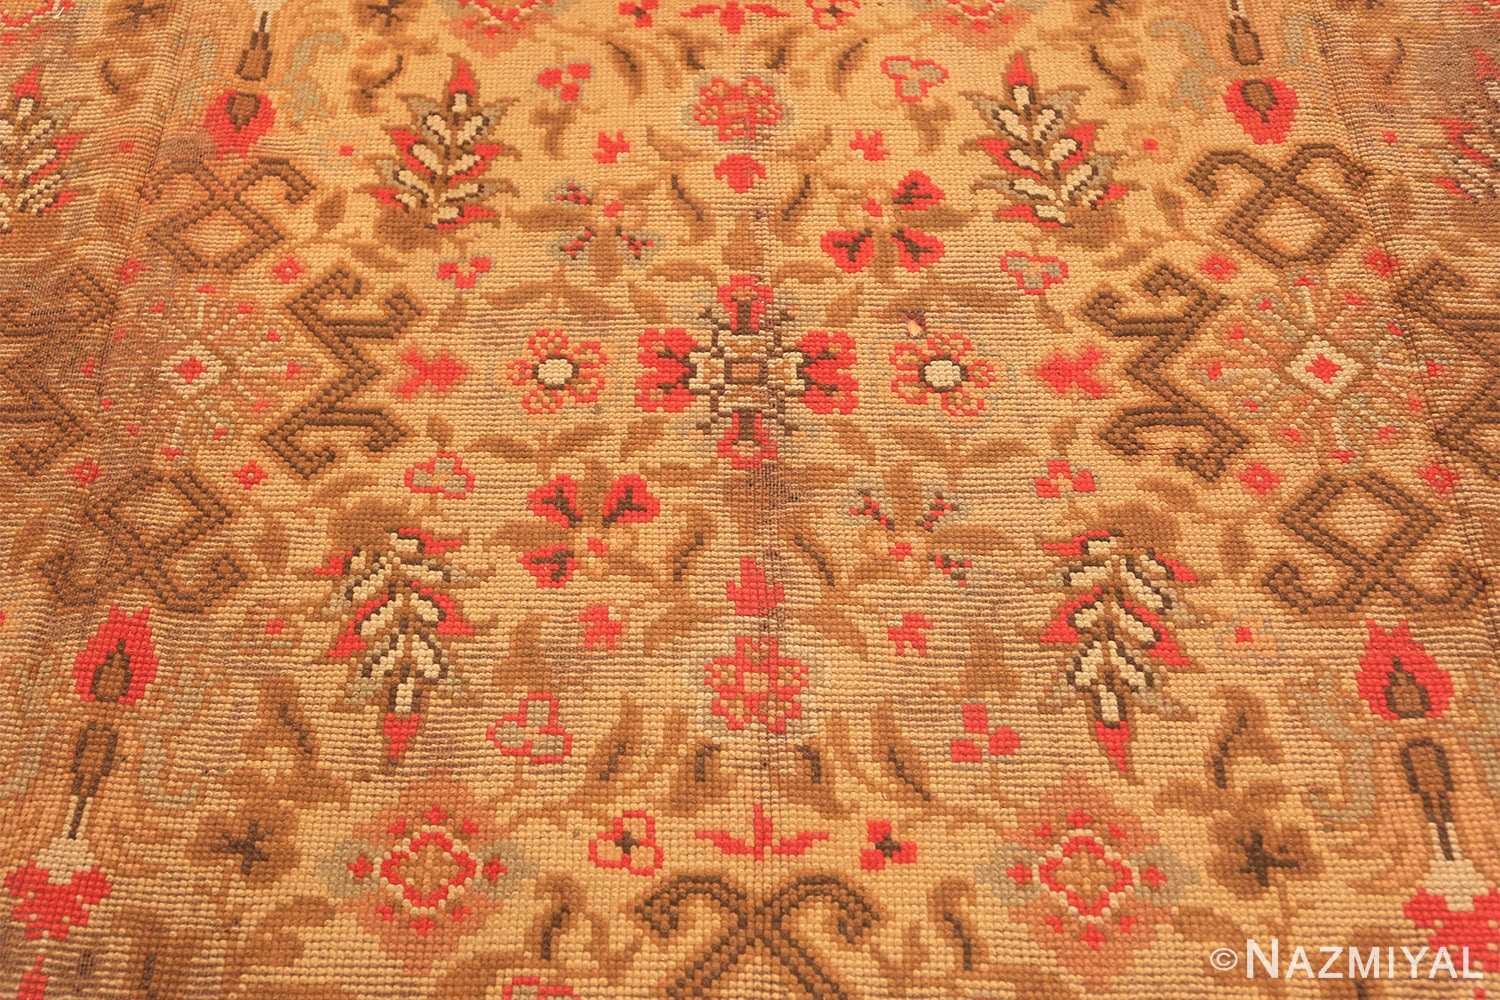 Background Large Shabby chic Antique Irish Donegal carpet 2688 by Nazmiyal